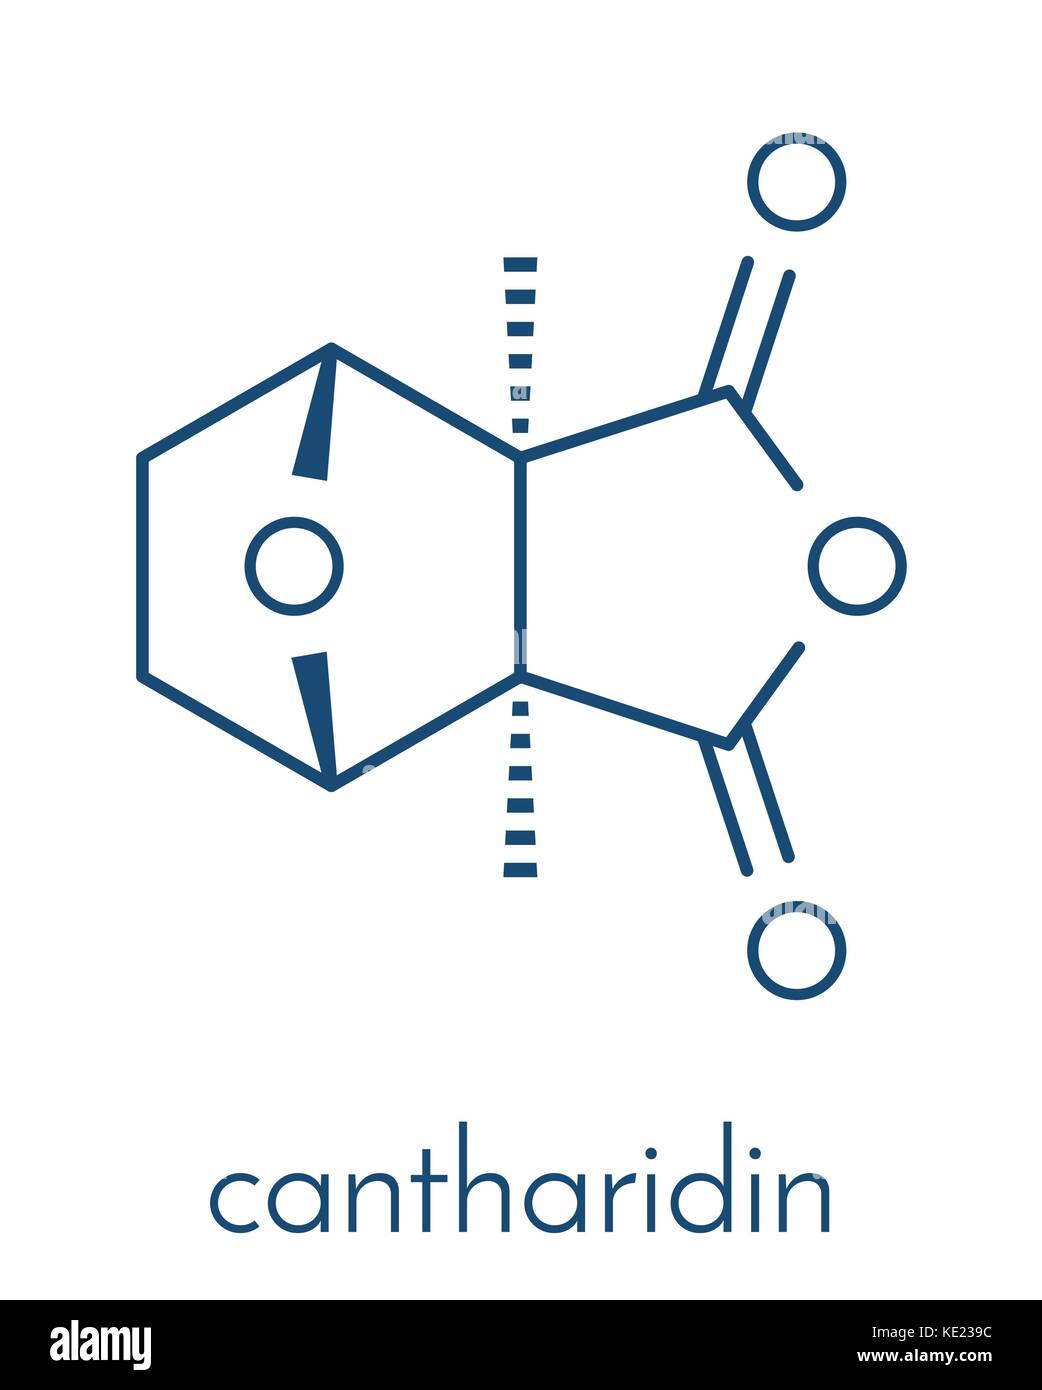 Cantharidin blister beetle poison molecule. Secreted by blister beetles, spanish fly, soldier beetles, etc. Skeletal formula. Stock Vector